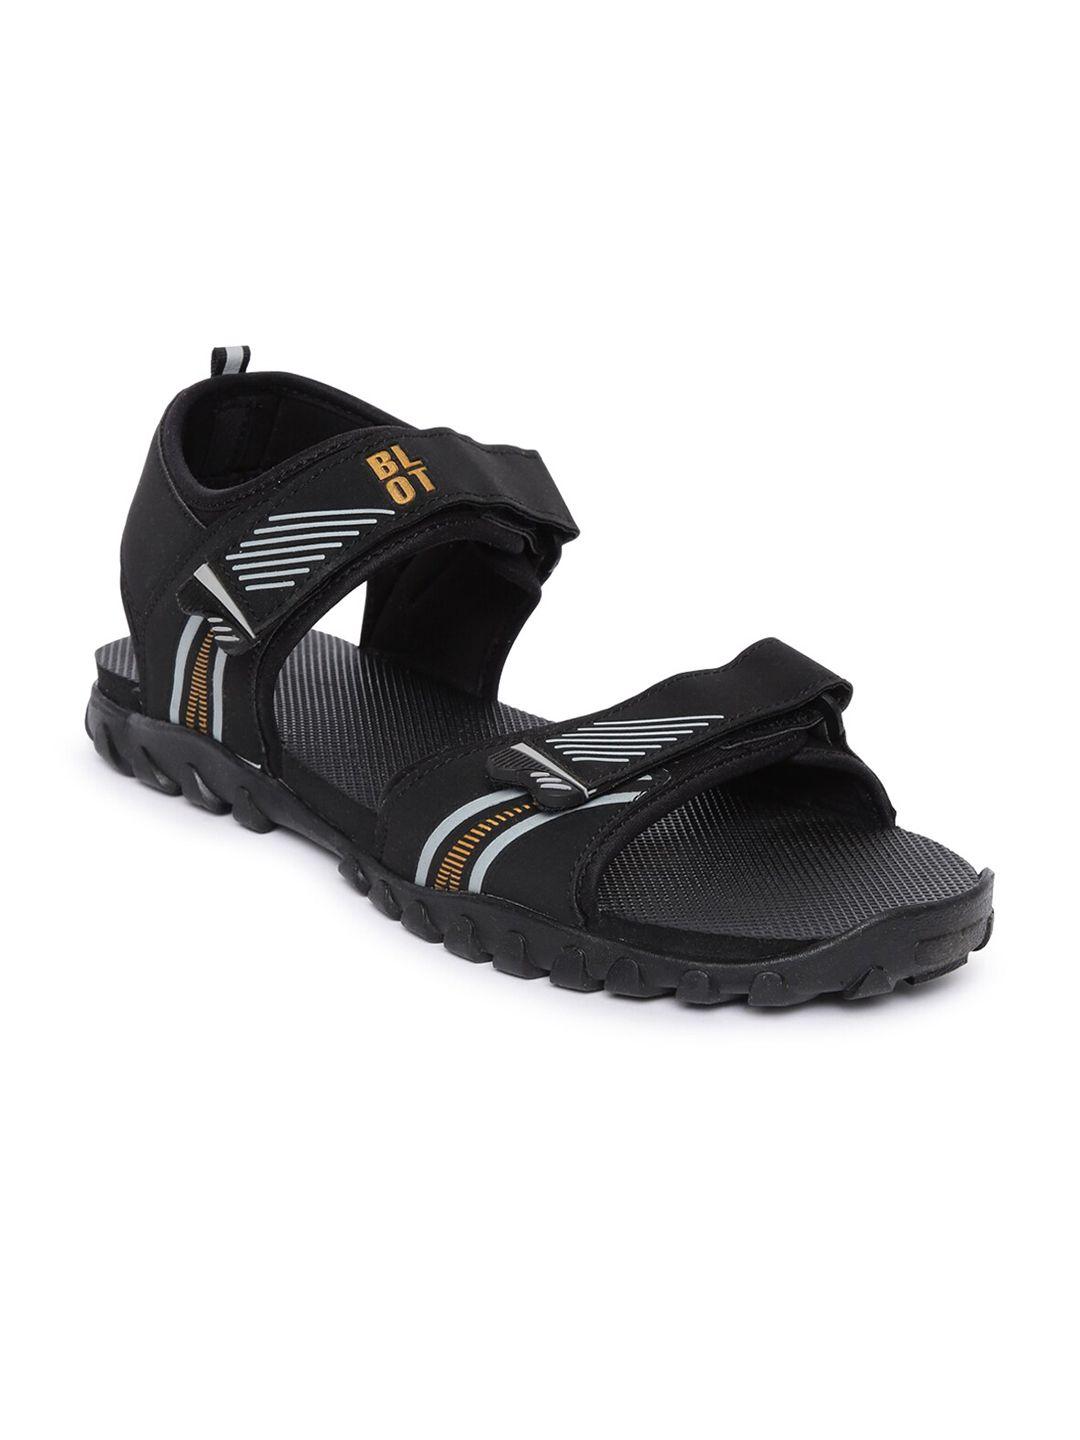 paragon-men-printed-comfort-sandals